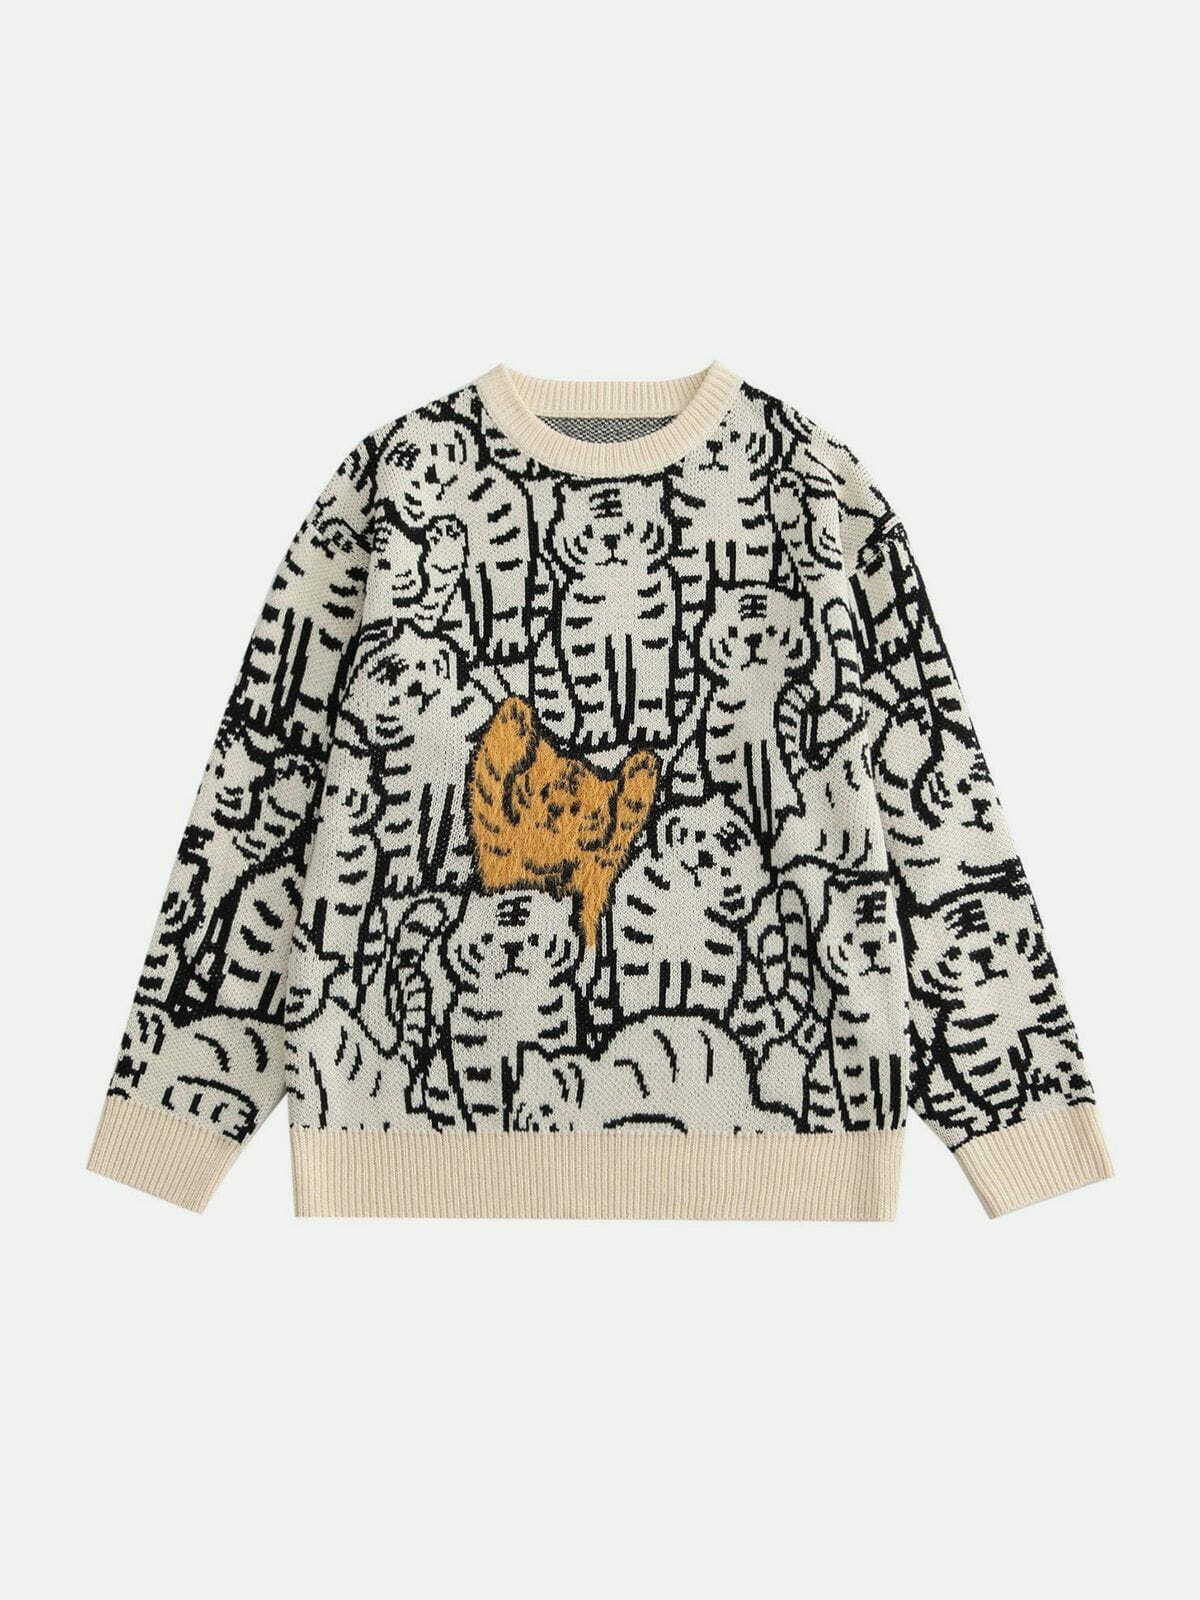 tiger print knit sweater edgy y2k fashion icon 4461